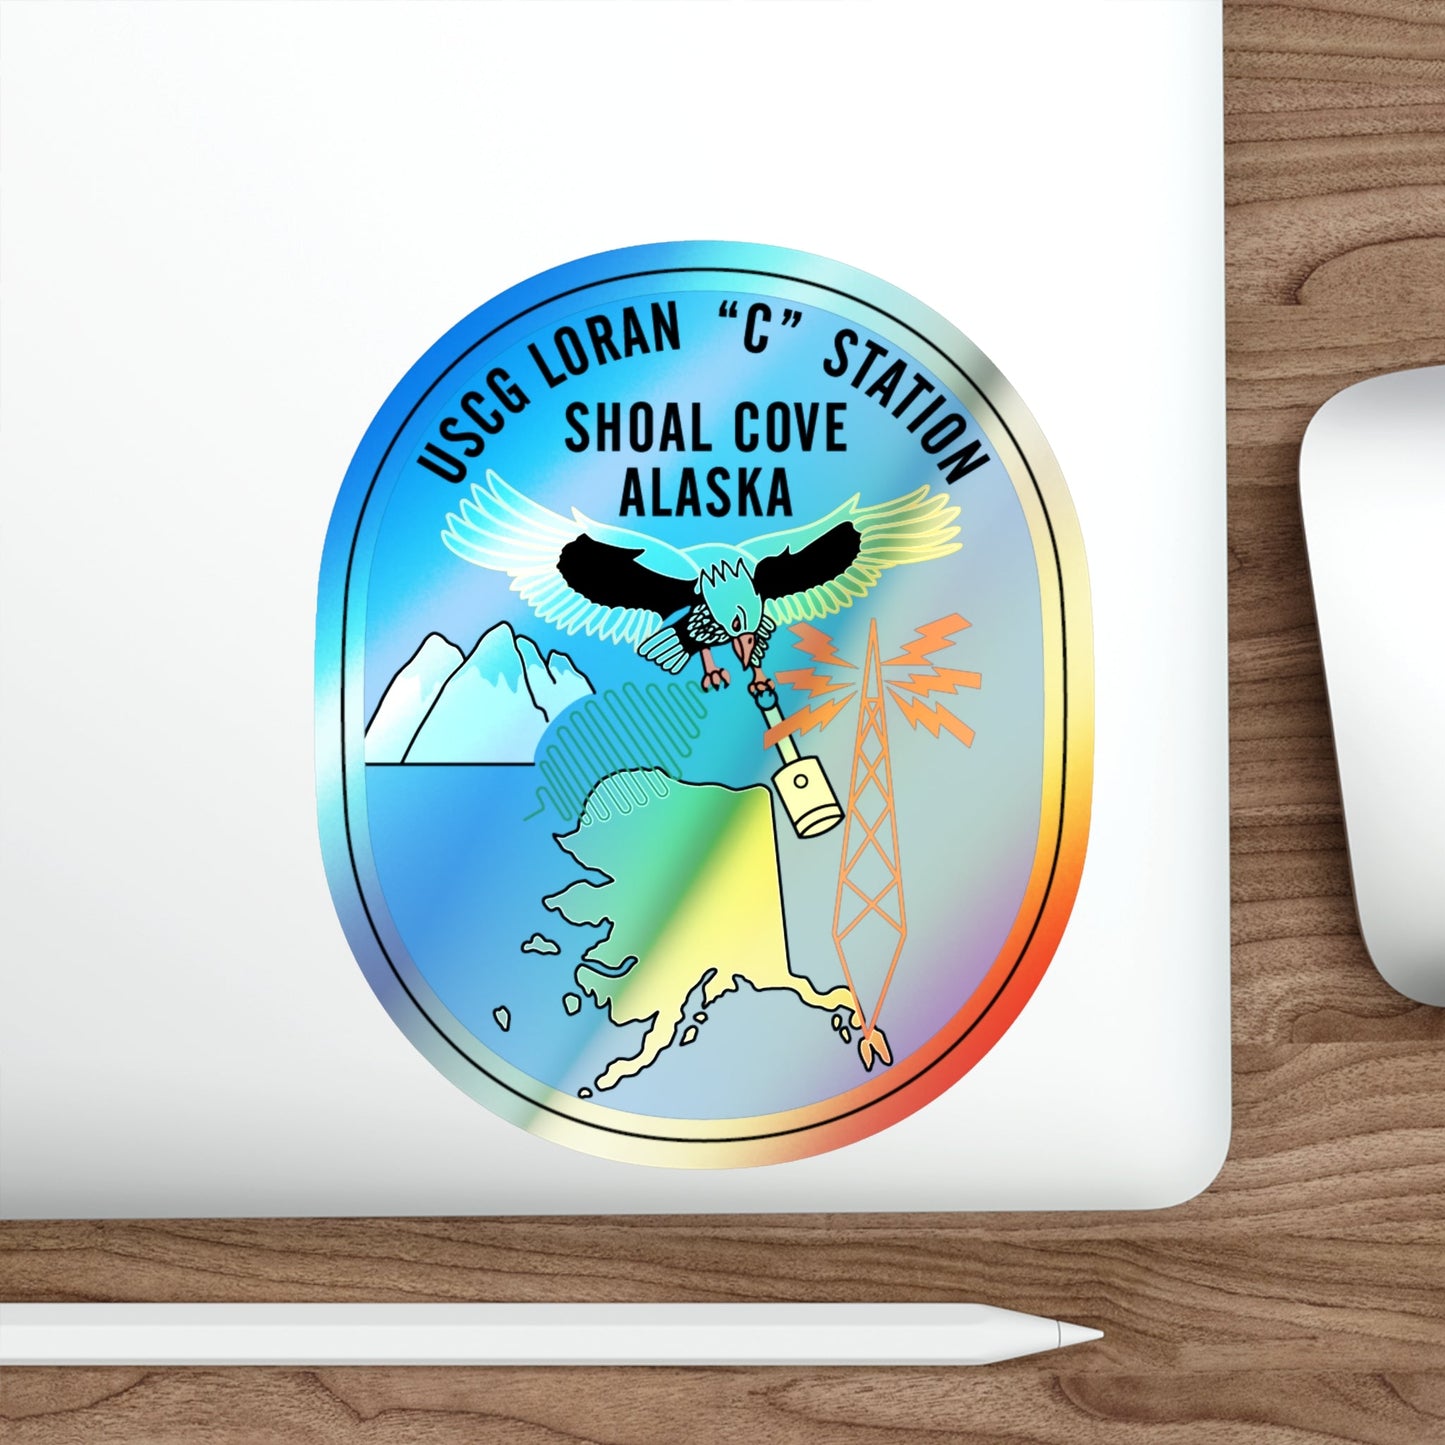 USCG Loran C Station Shoal Cove Alaska (U.S. Coast Guard) Holographic STICKER Die-Cut Vinyl Decal-The Sticker Space